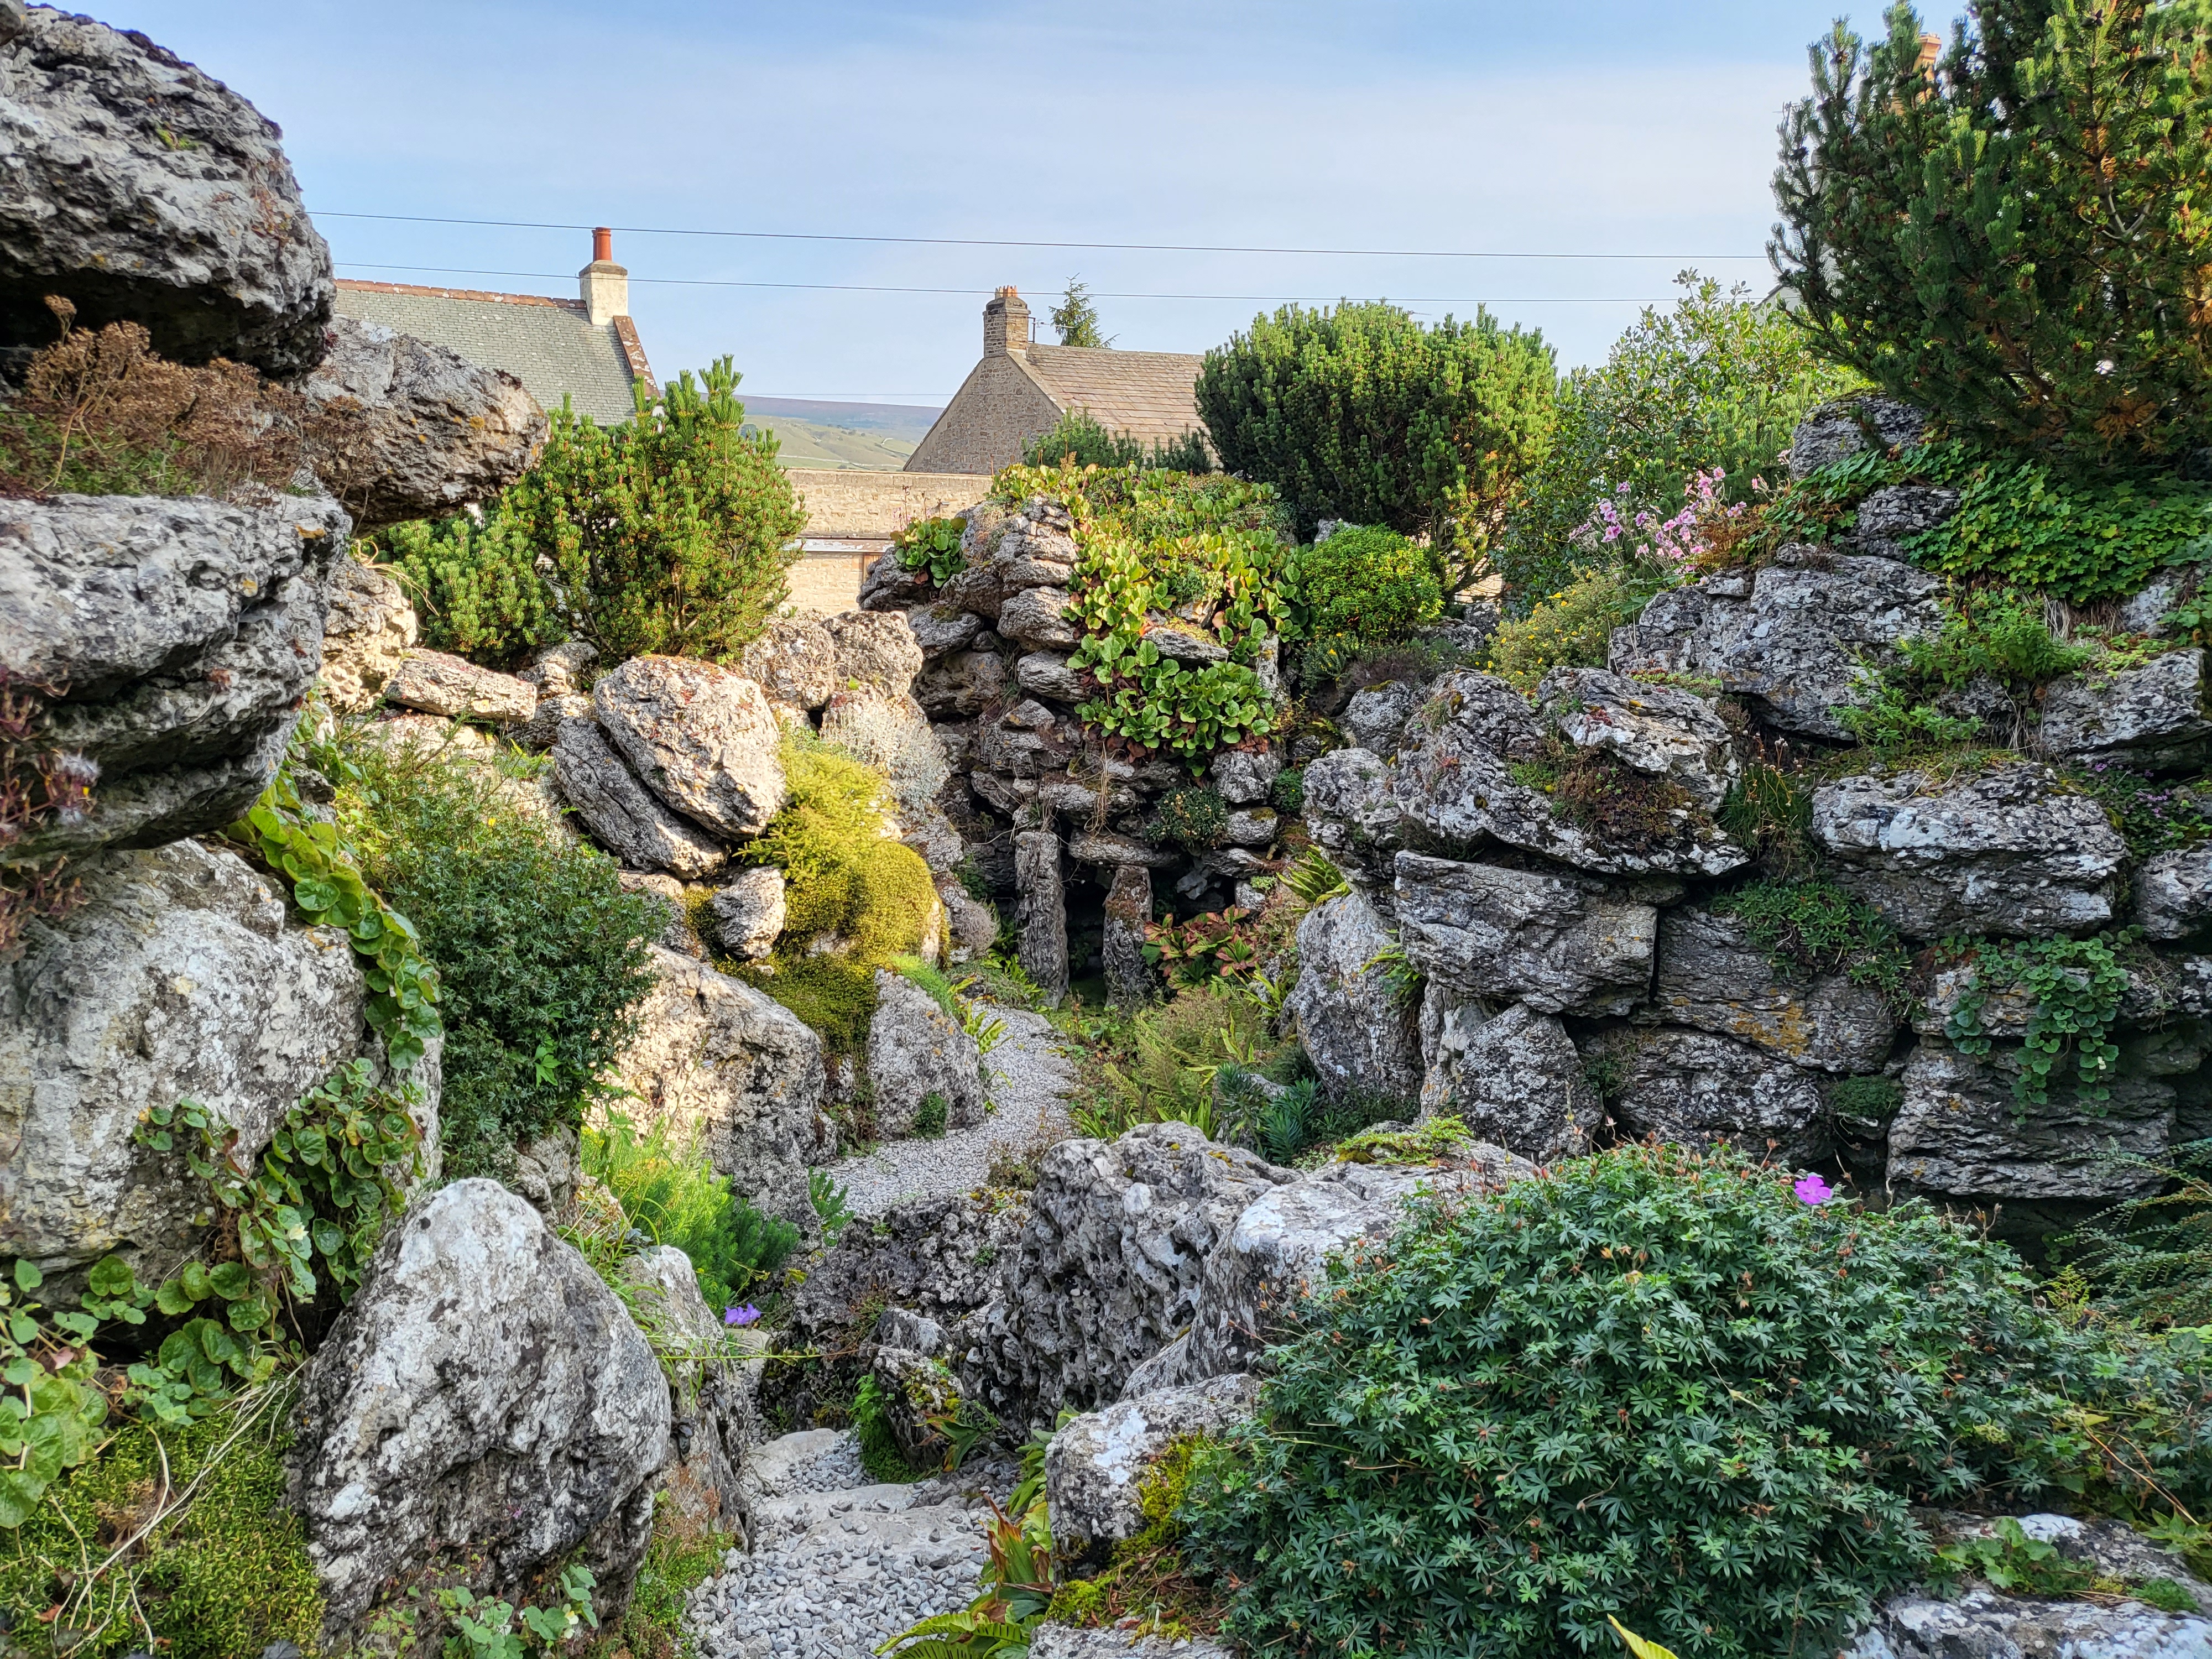 The Aysgarth rock garden